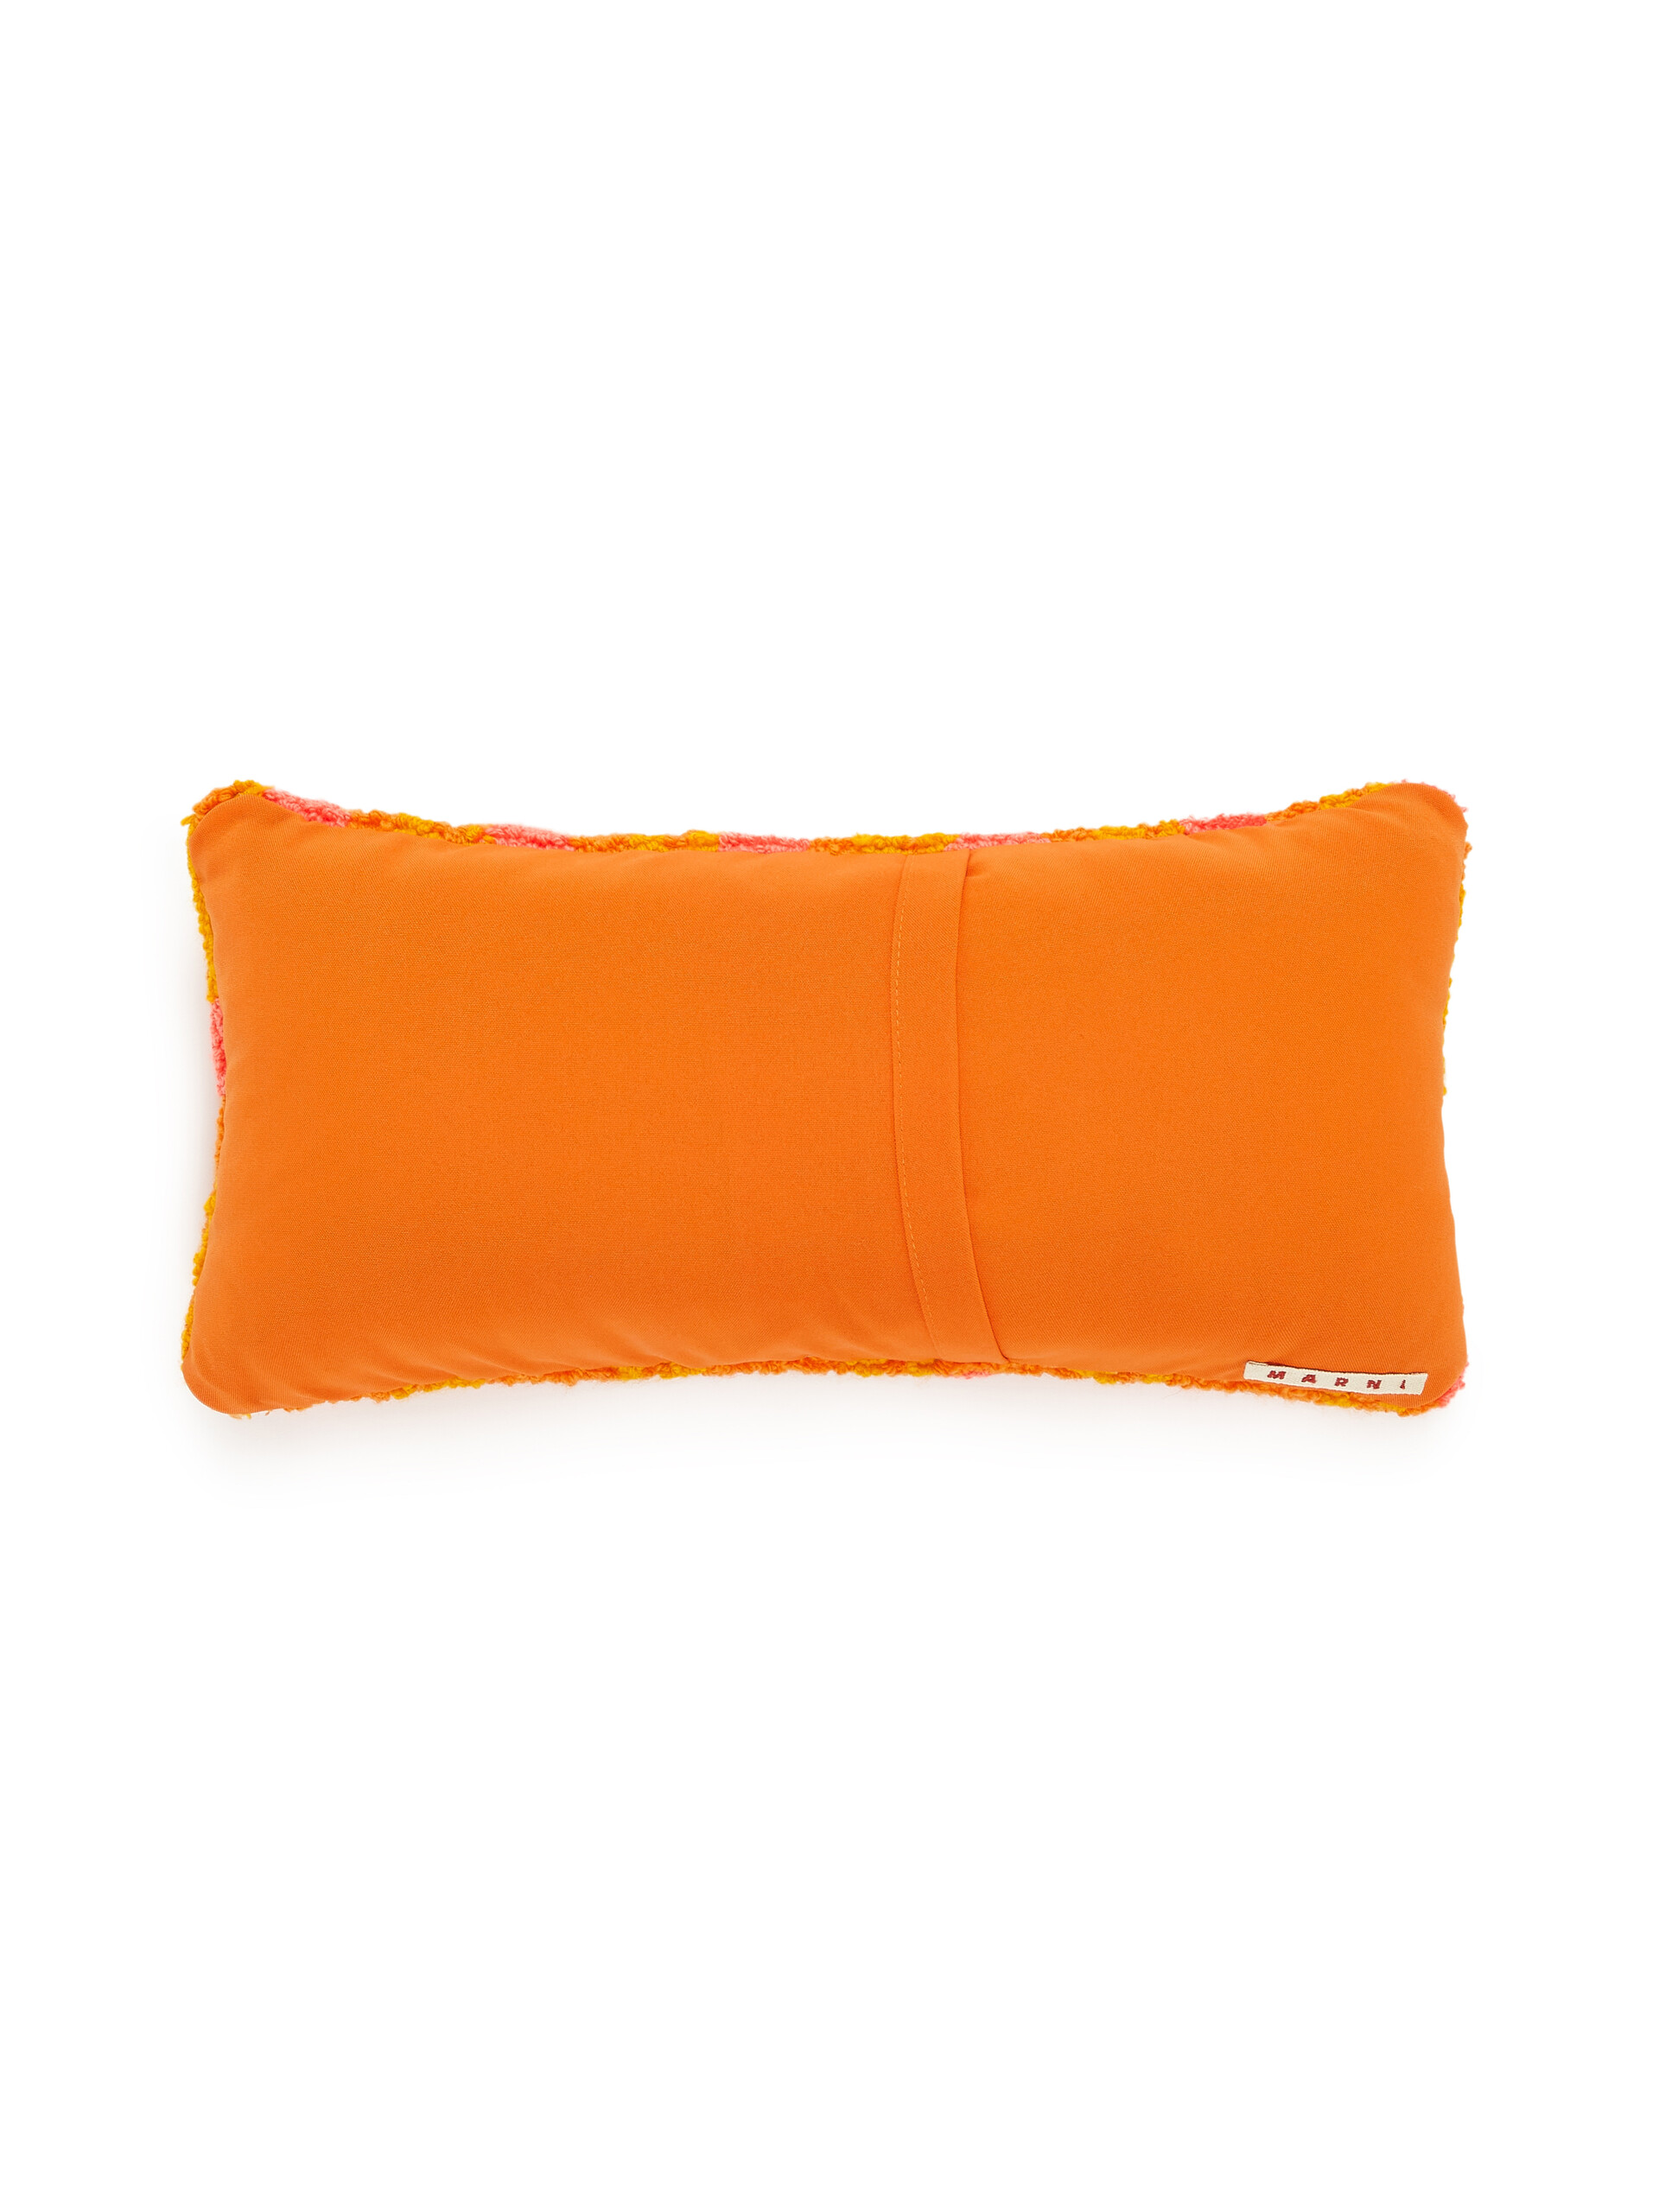 Multicolor orange fabric MARNI MARKET pillow - Furniture - Image 2